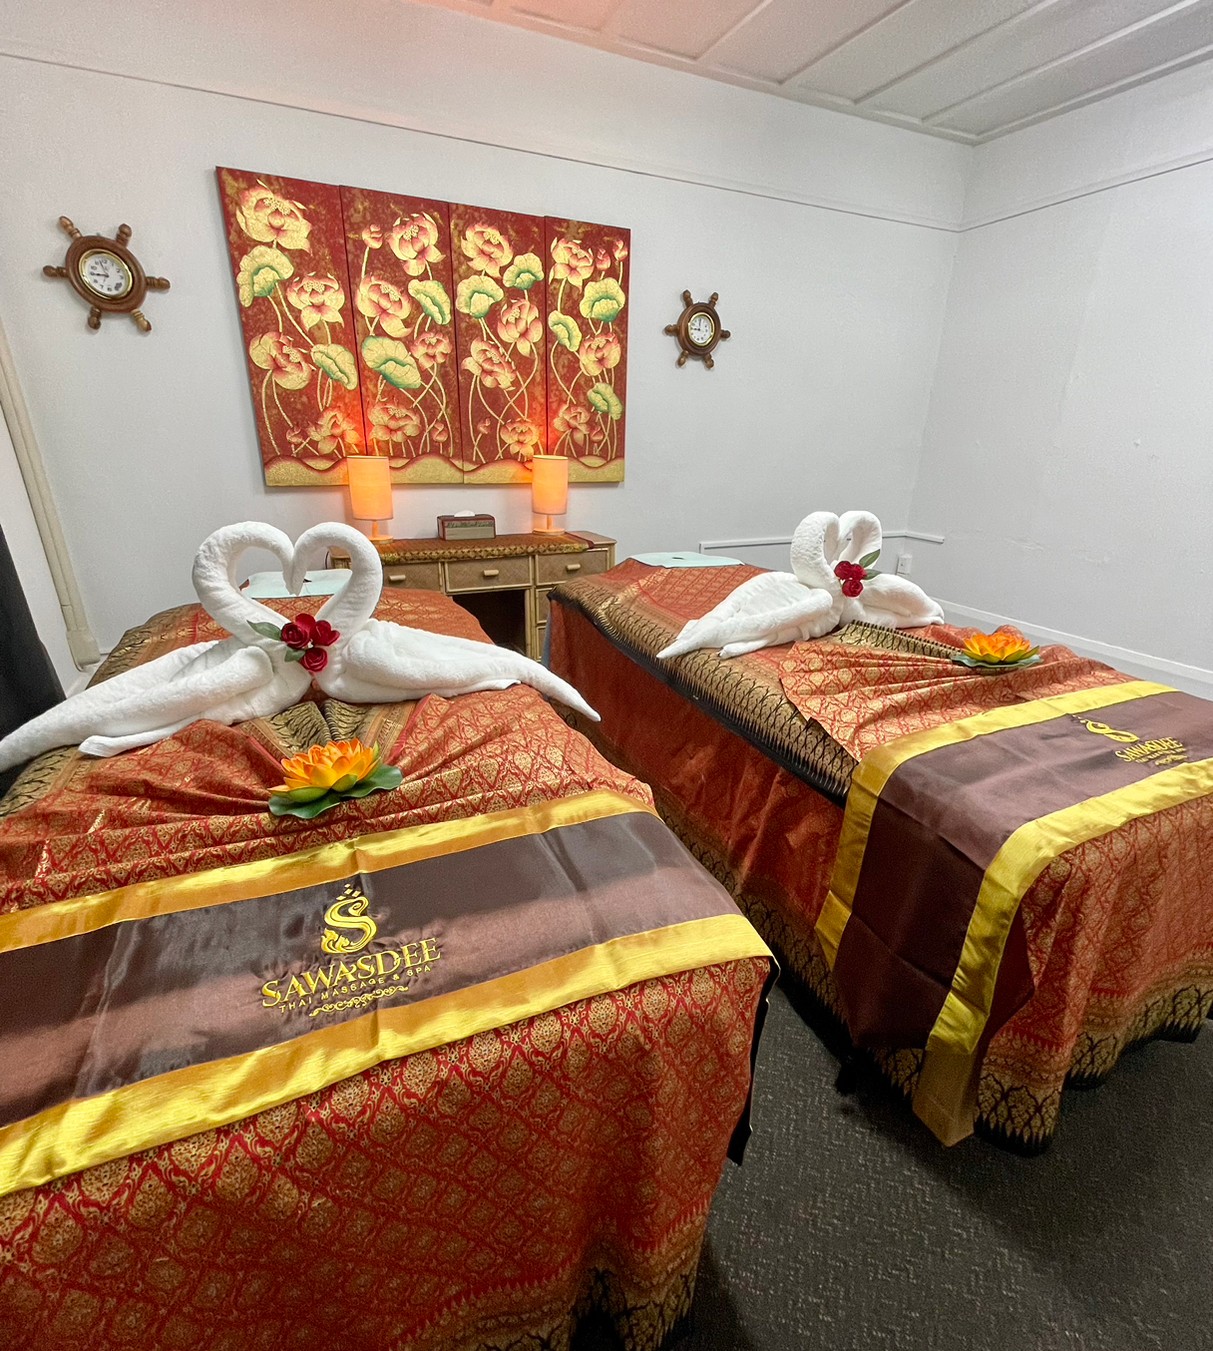 Gallery Sawasdee Thai Massage And Spaparnell 2682